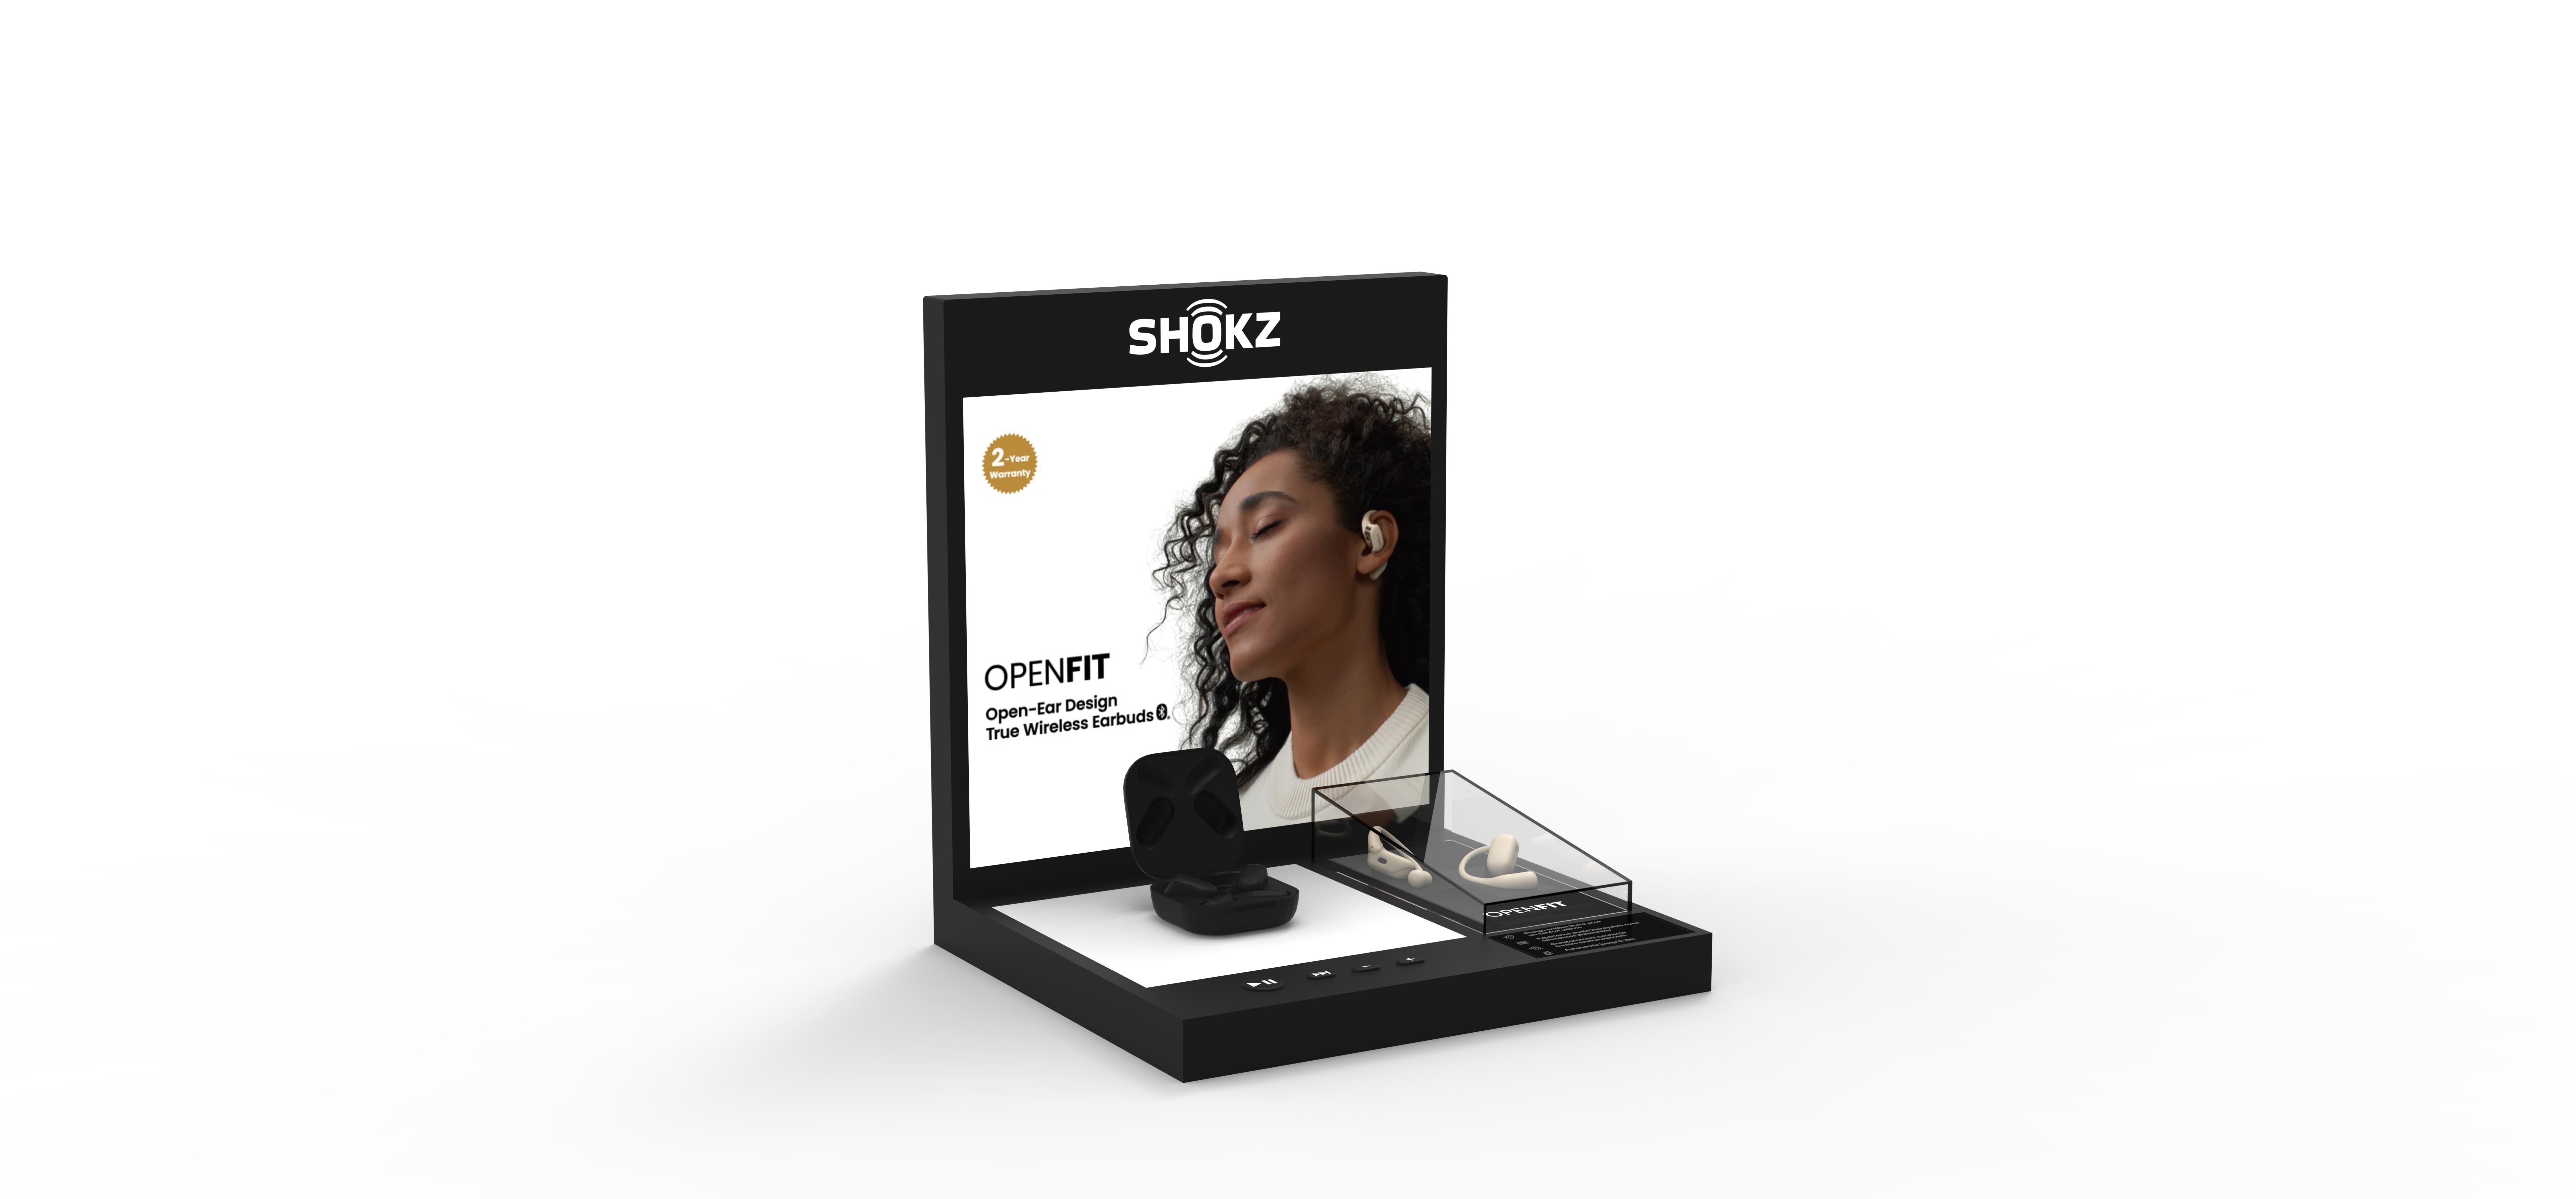 Image Shokz Standard 2.0 POP (OpenFit) - English